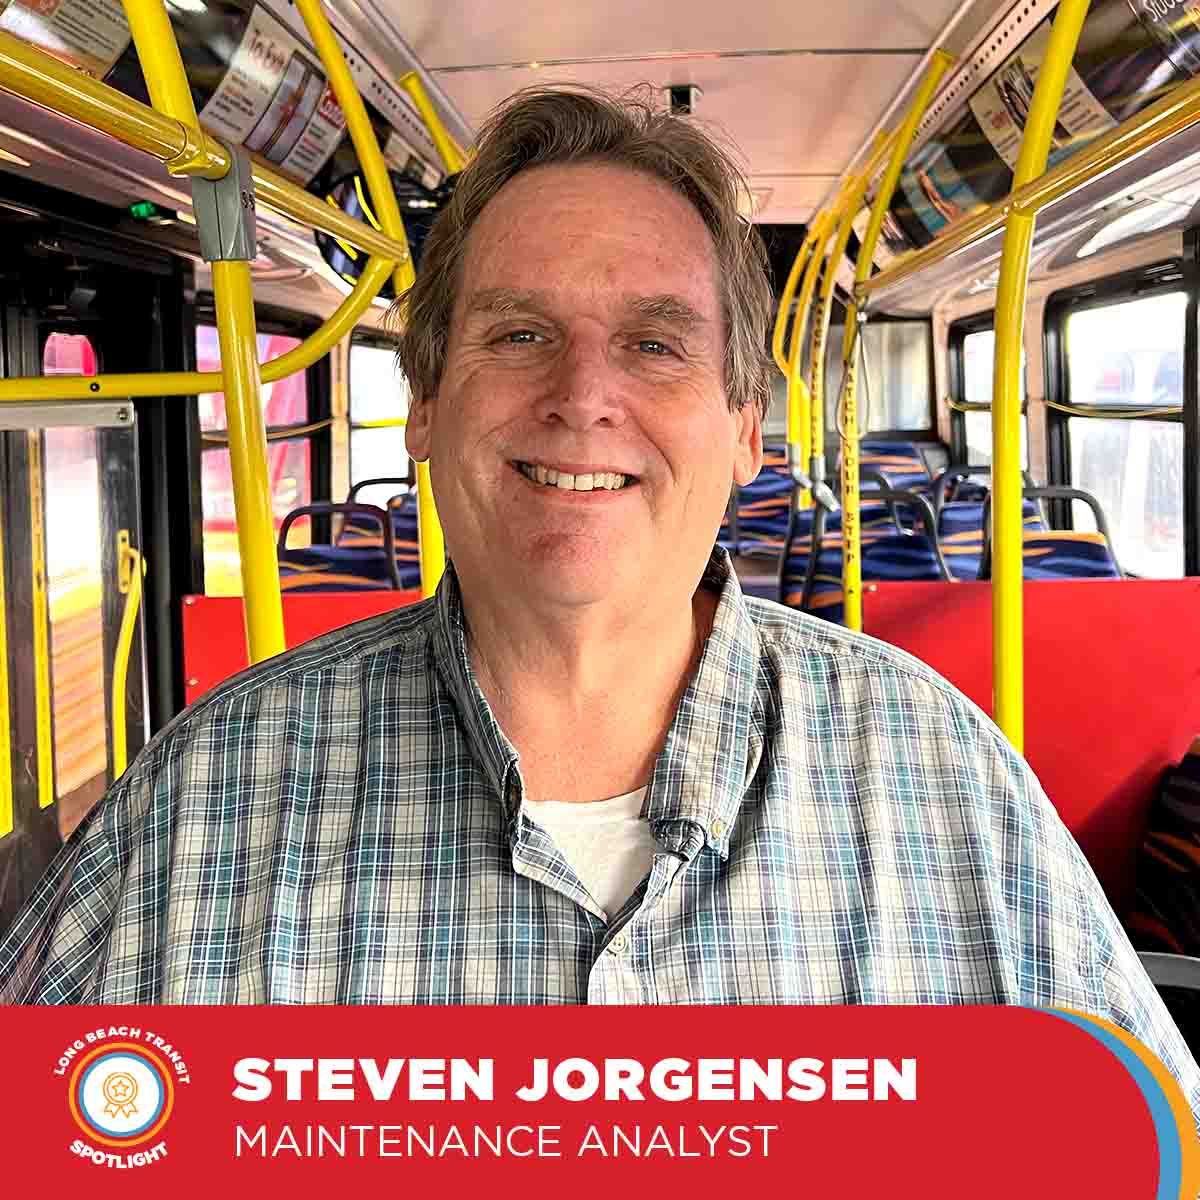 Steven Jorgensen